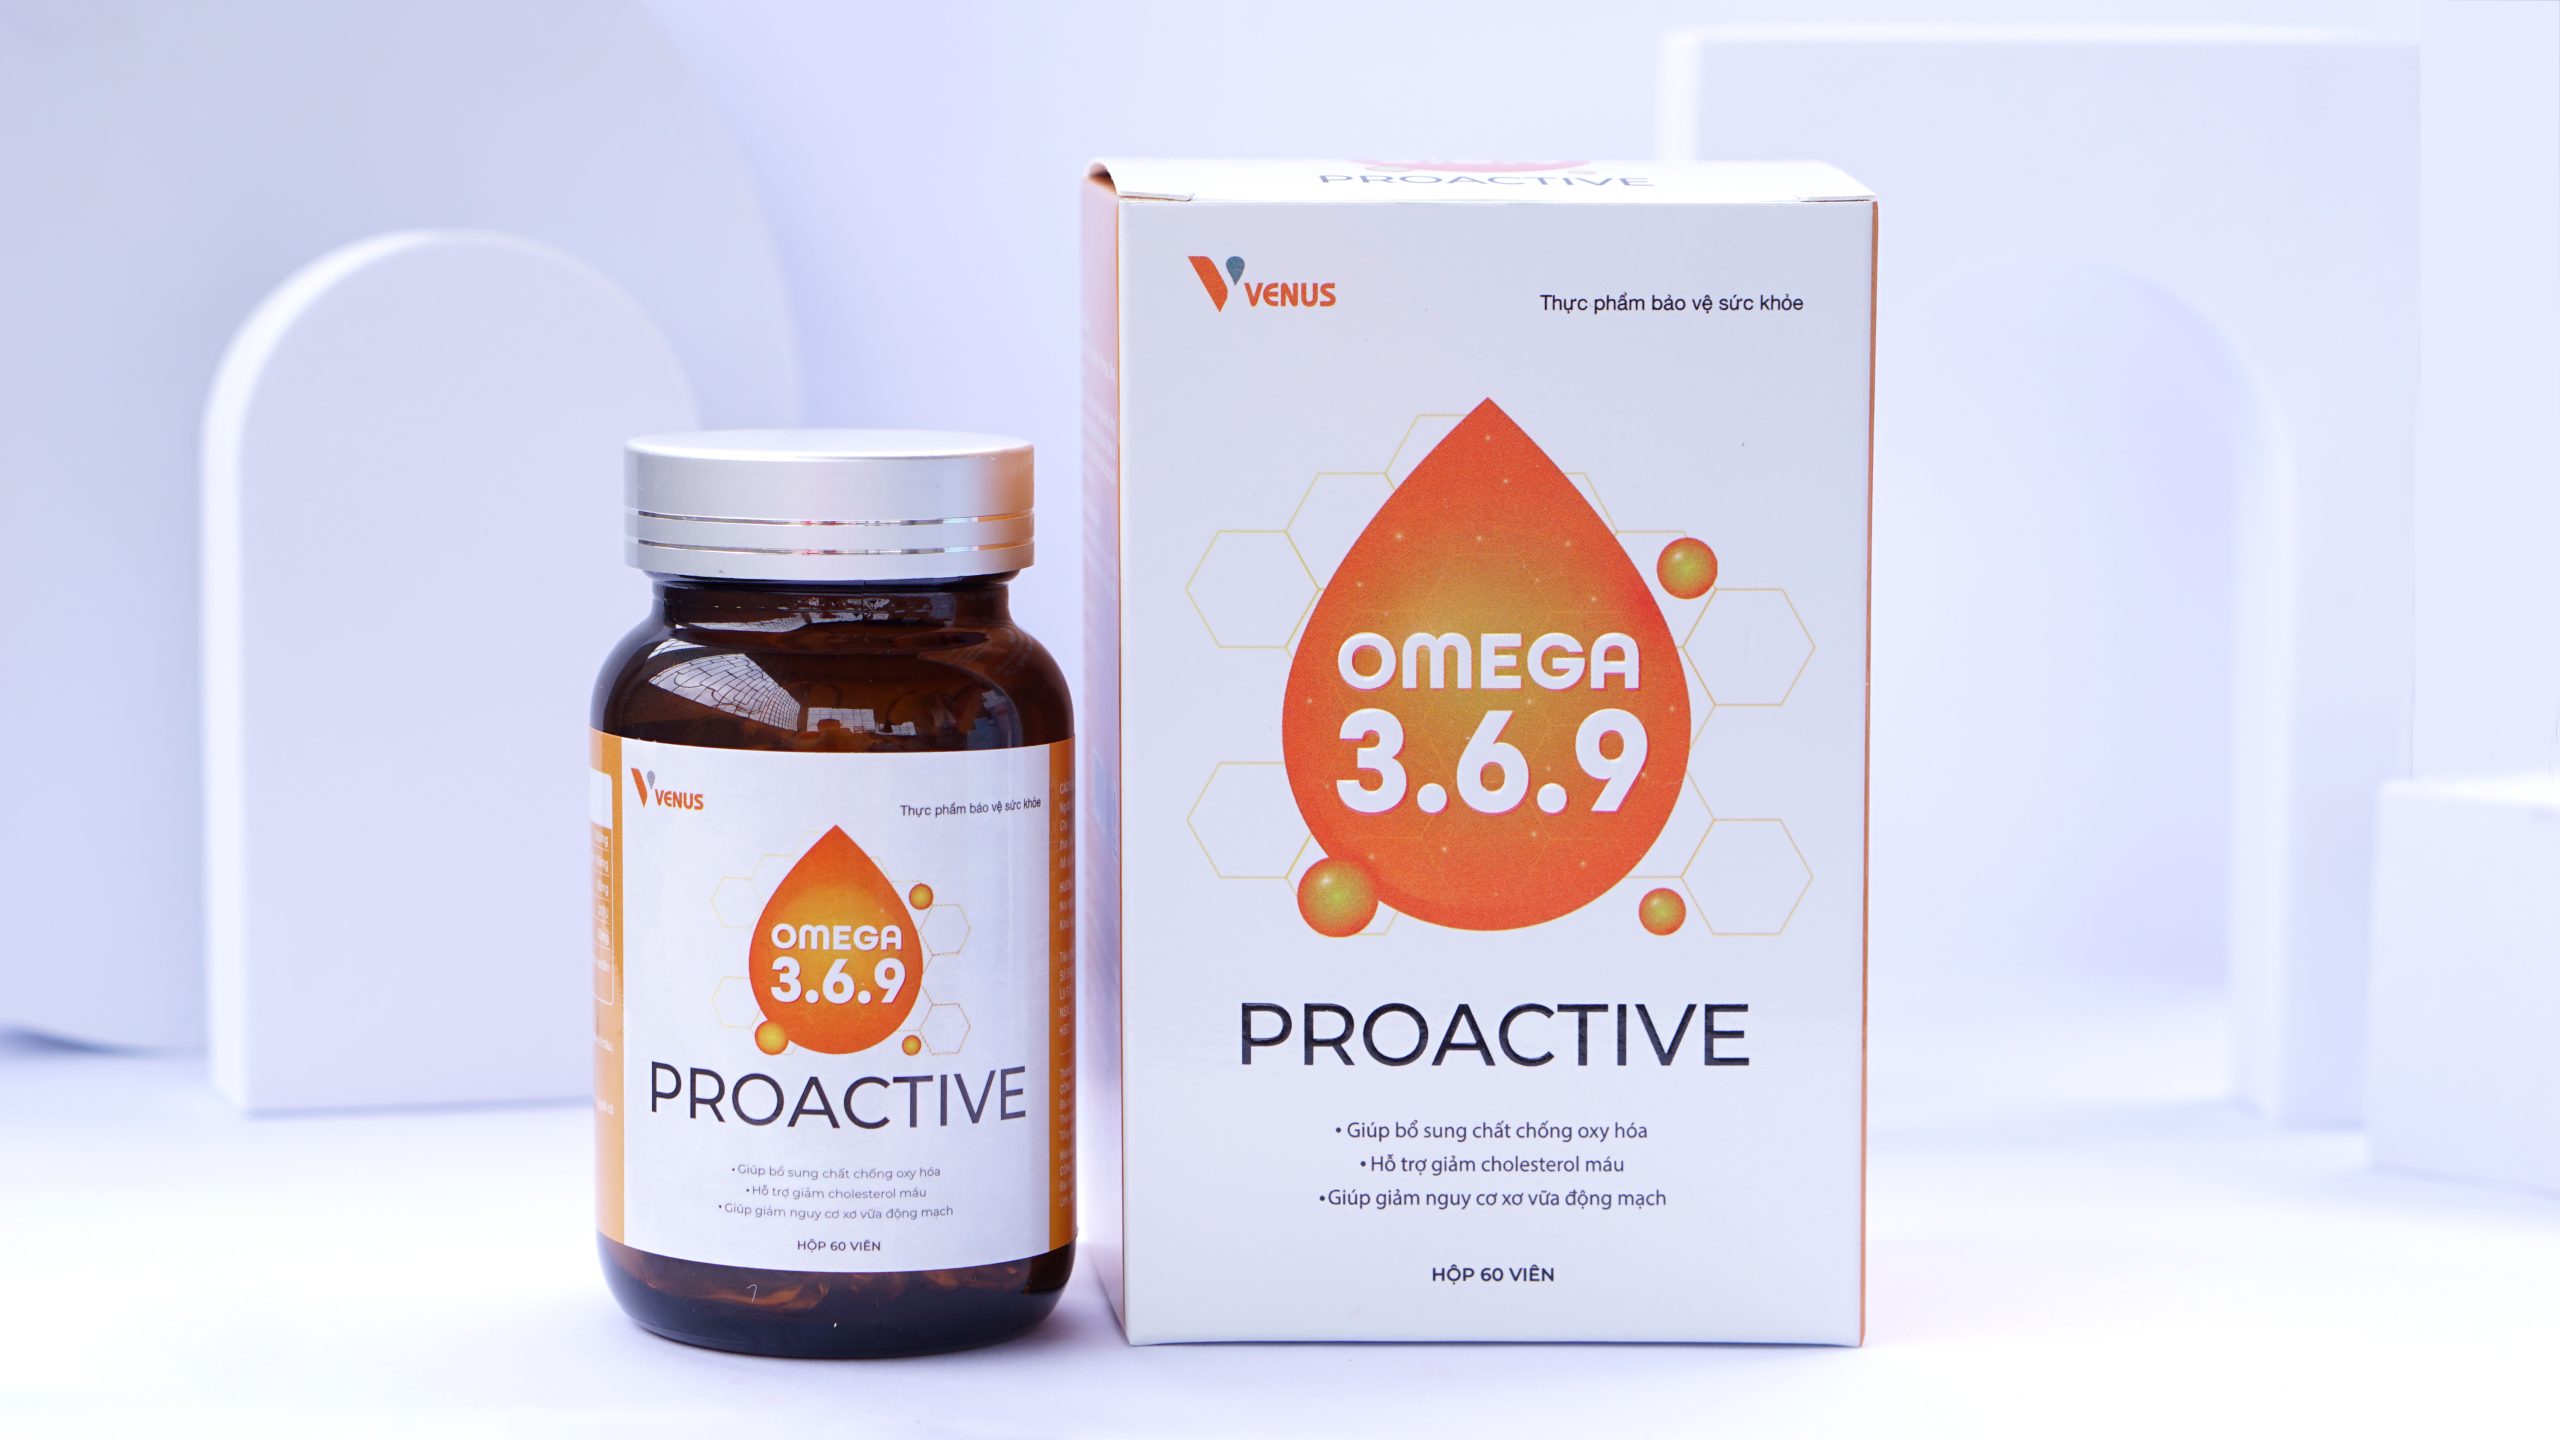 Omega 369 proactive